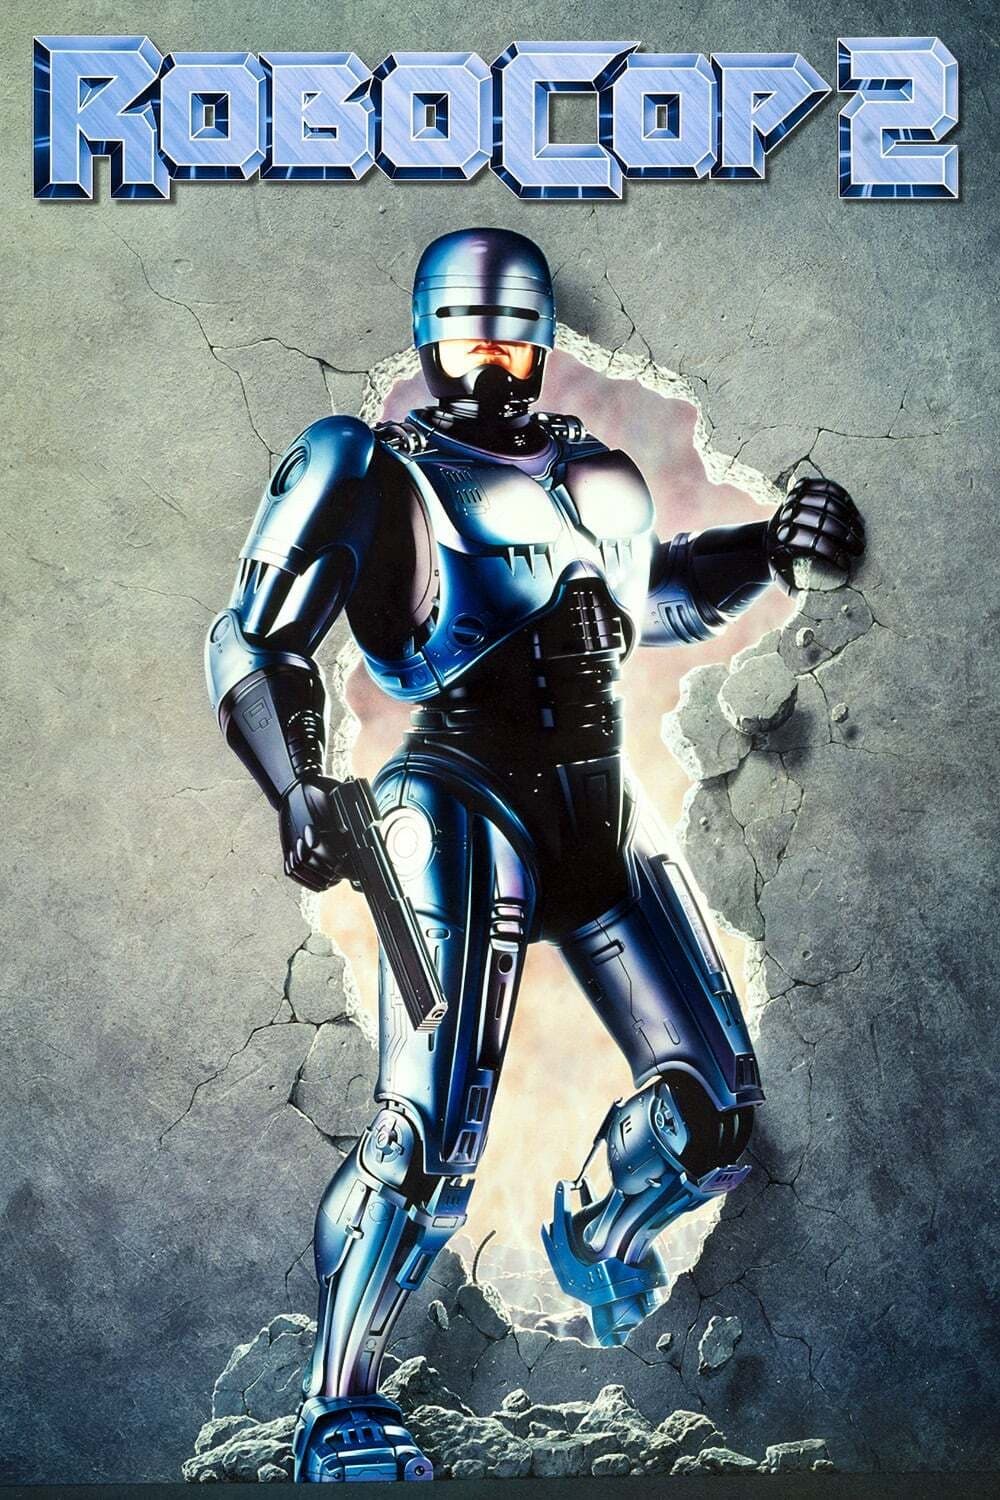 Cảnh Sát Người Máy 2 - RoboCop 2 (1990)